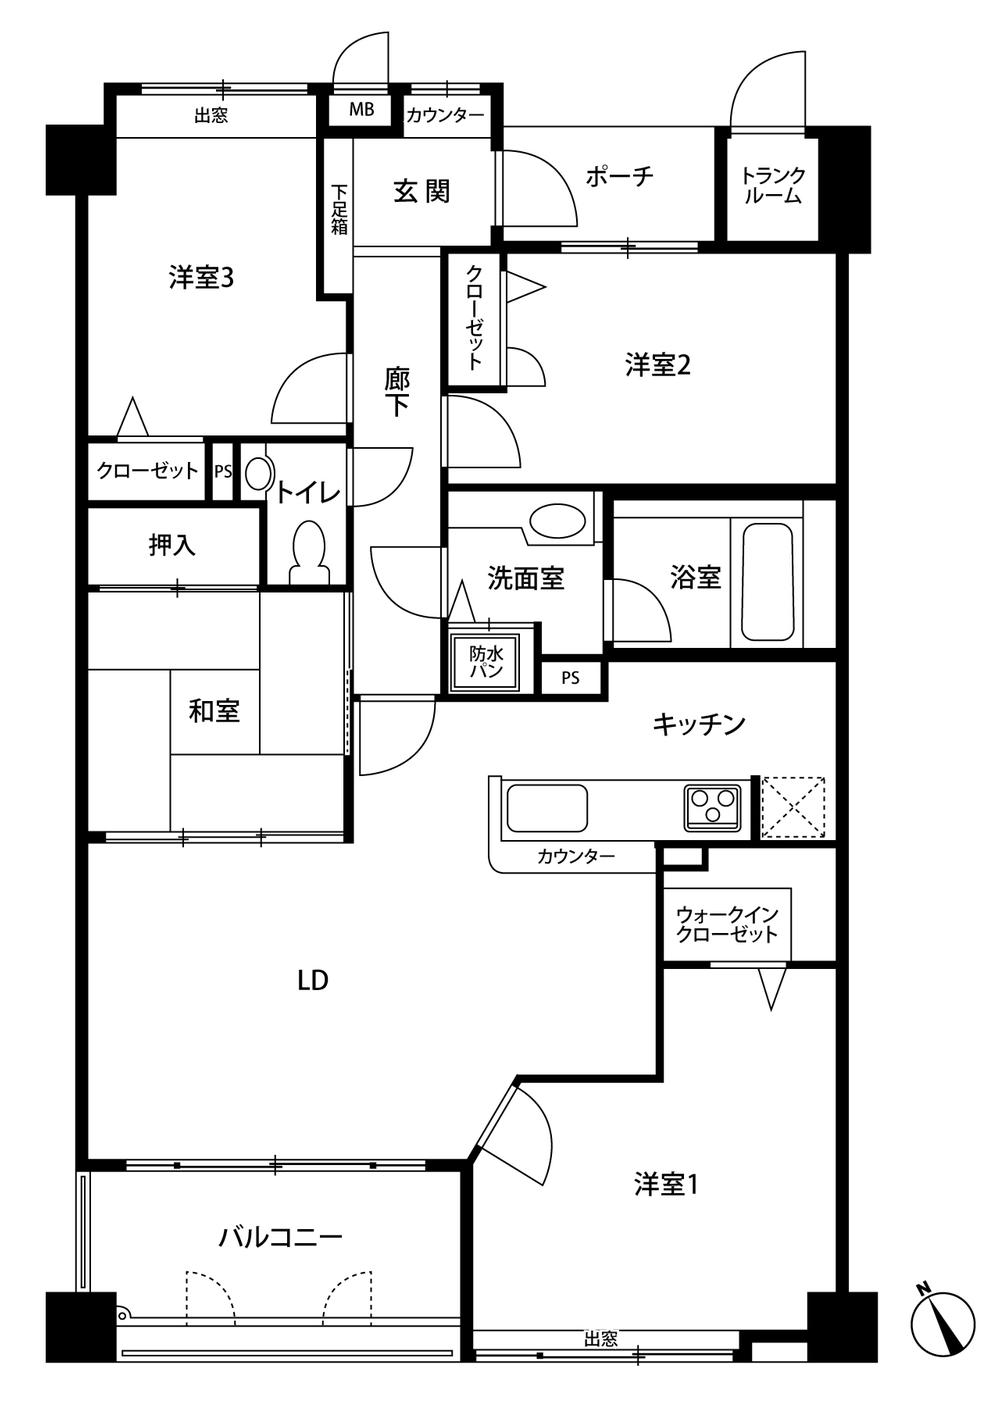 Floor plan. 4LDK, Price 20 million yen, Footprint 95 sq m , Balcony area 7.7 sq m